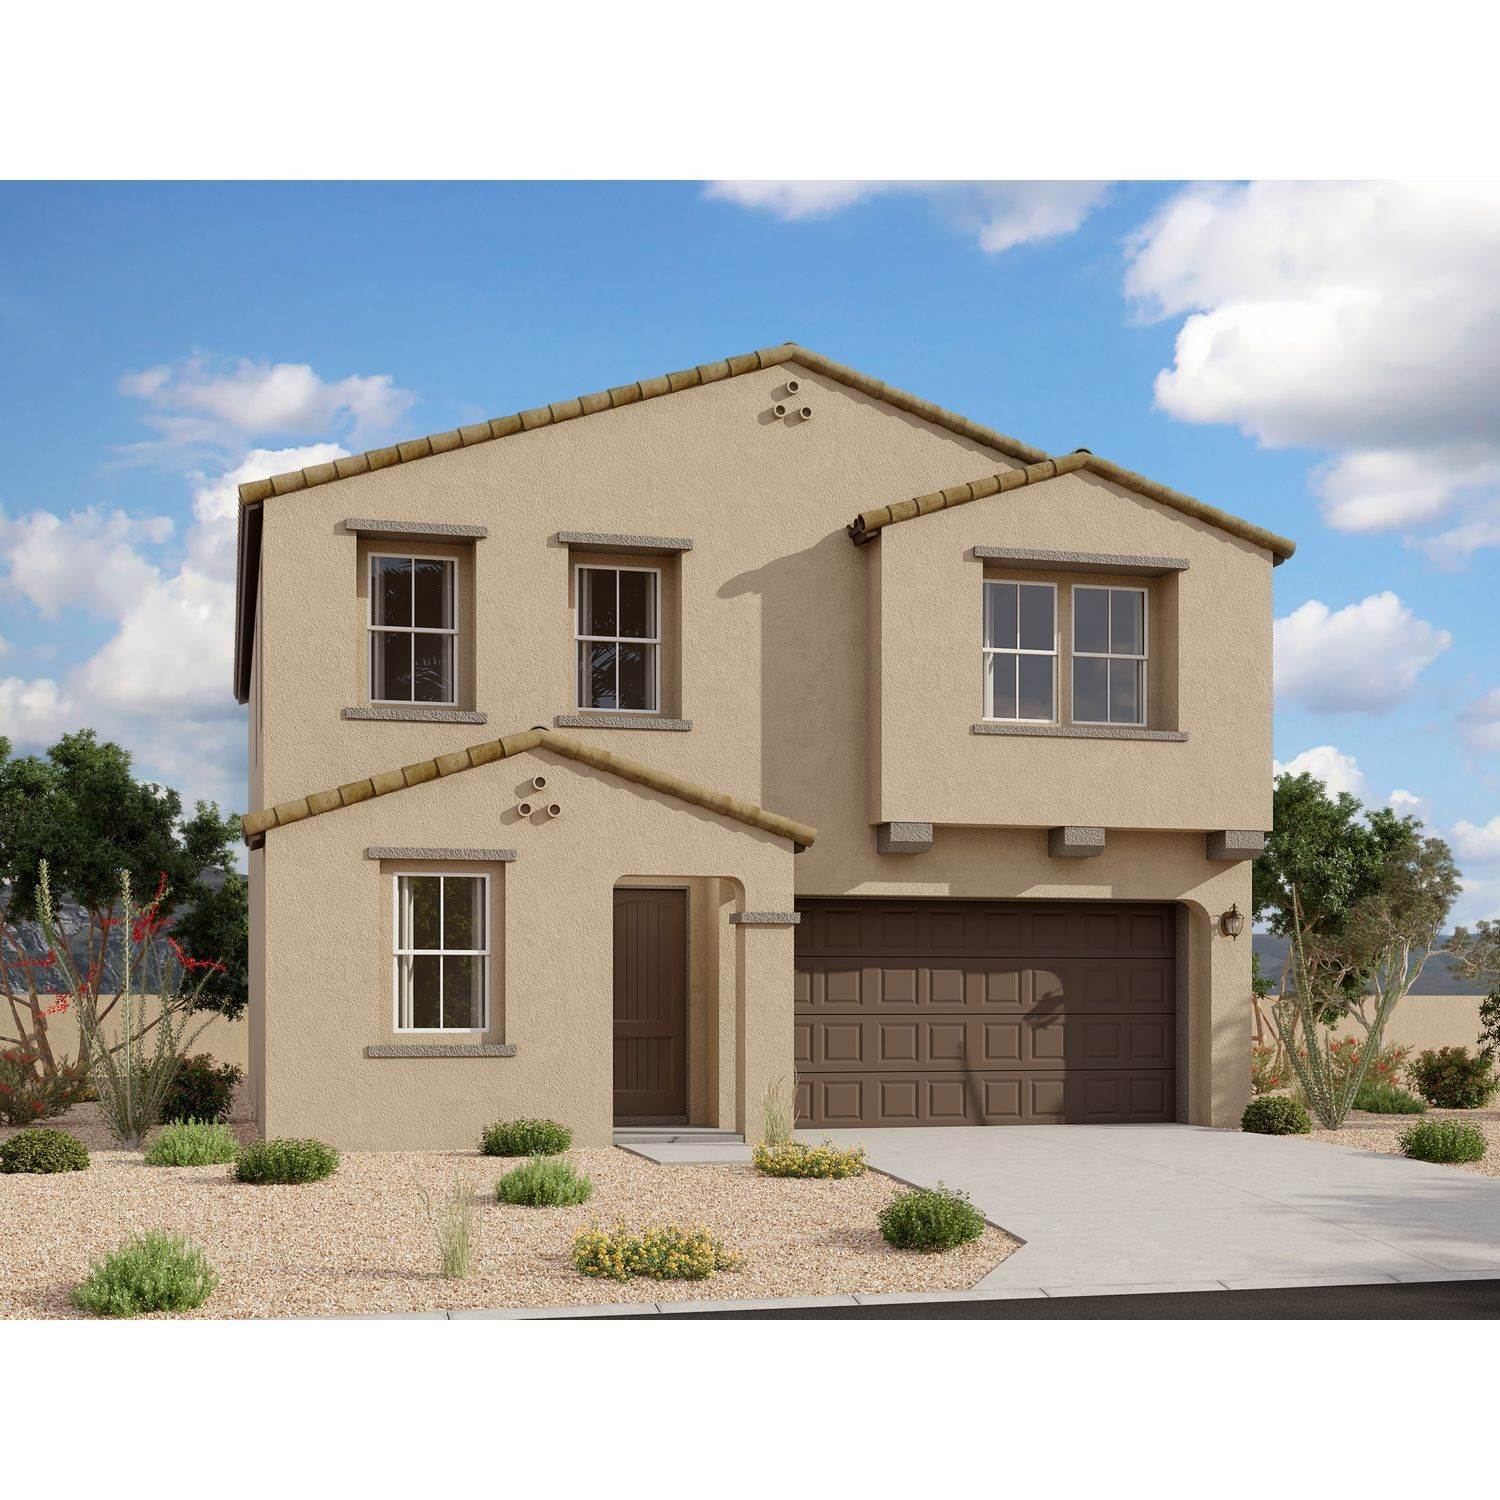 9. Single Family for Sale at Eastmark 9619 E Solina Ave, Mesa, AZ 85212